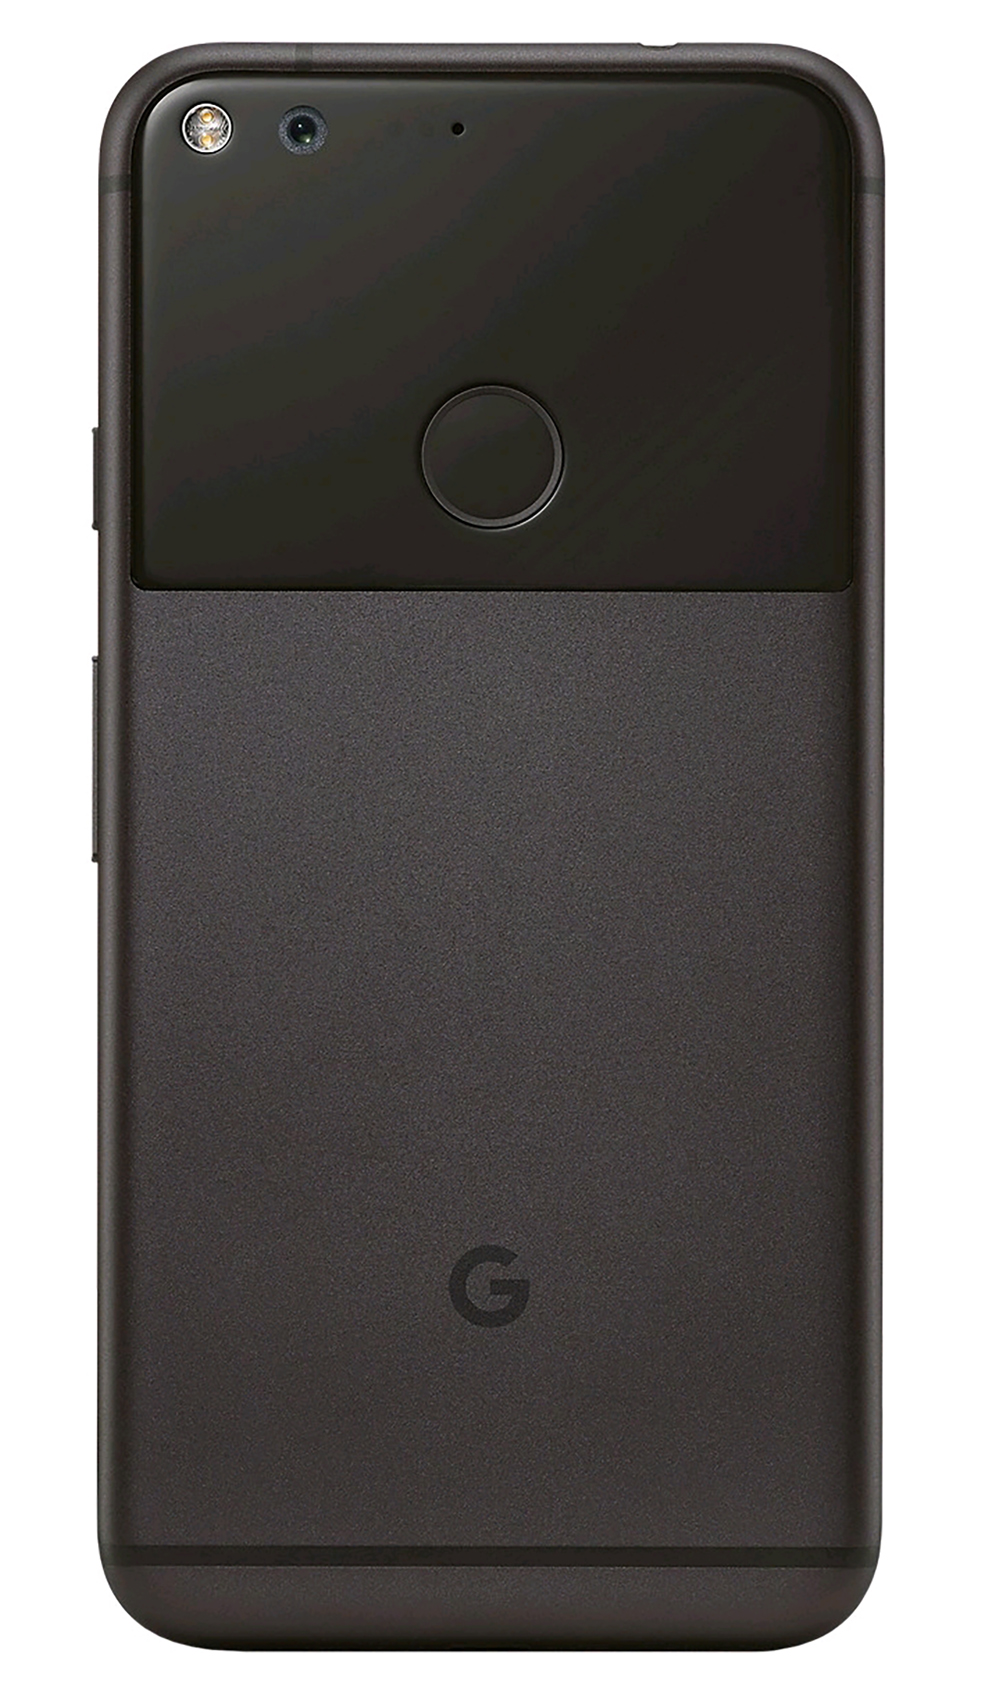 Google Pixel XL 128GB Unlocked GSM Phone w/ 12.3MP Camera - Quite Black - image 2 of 4